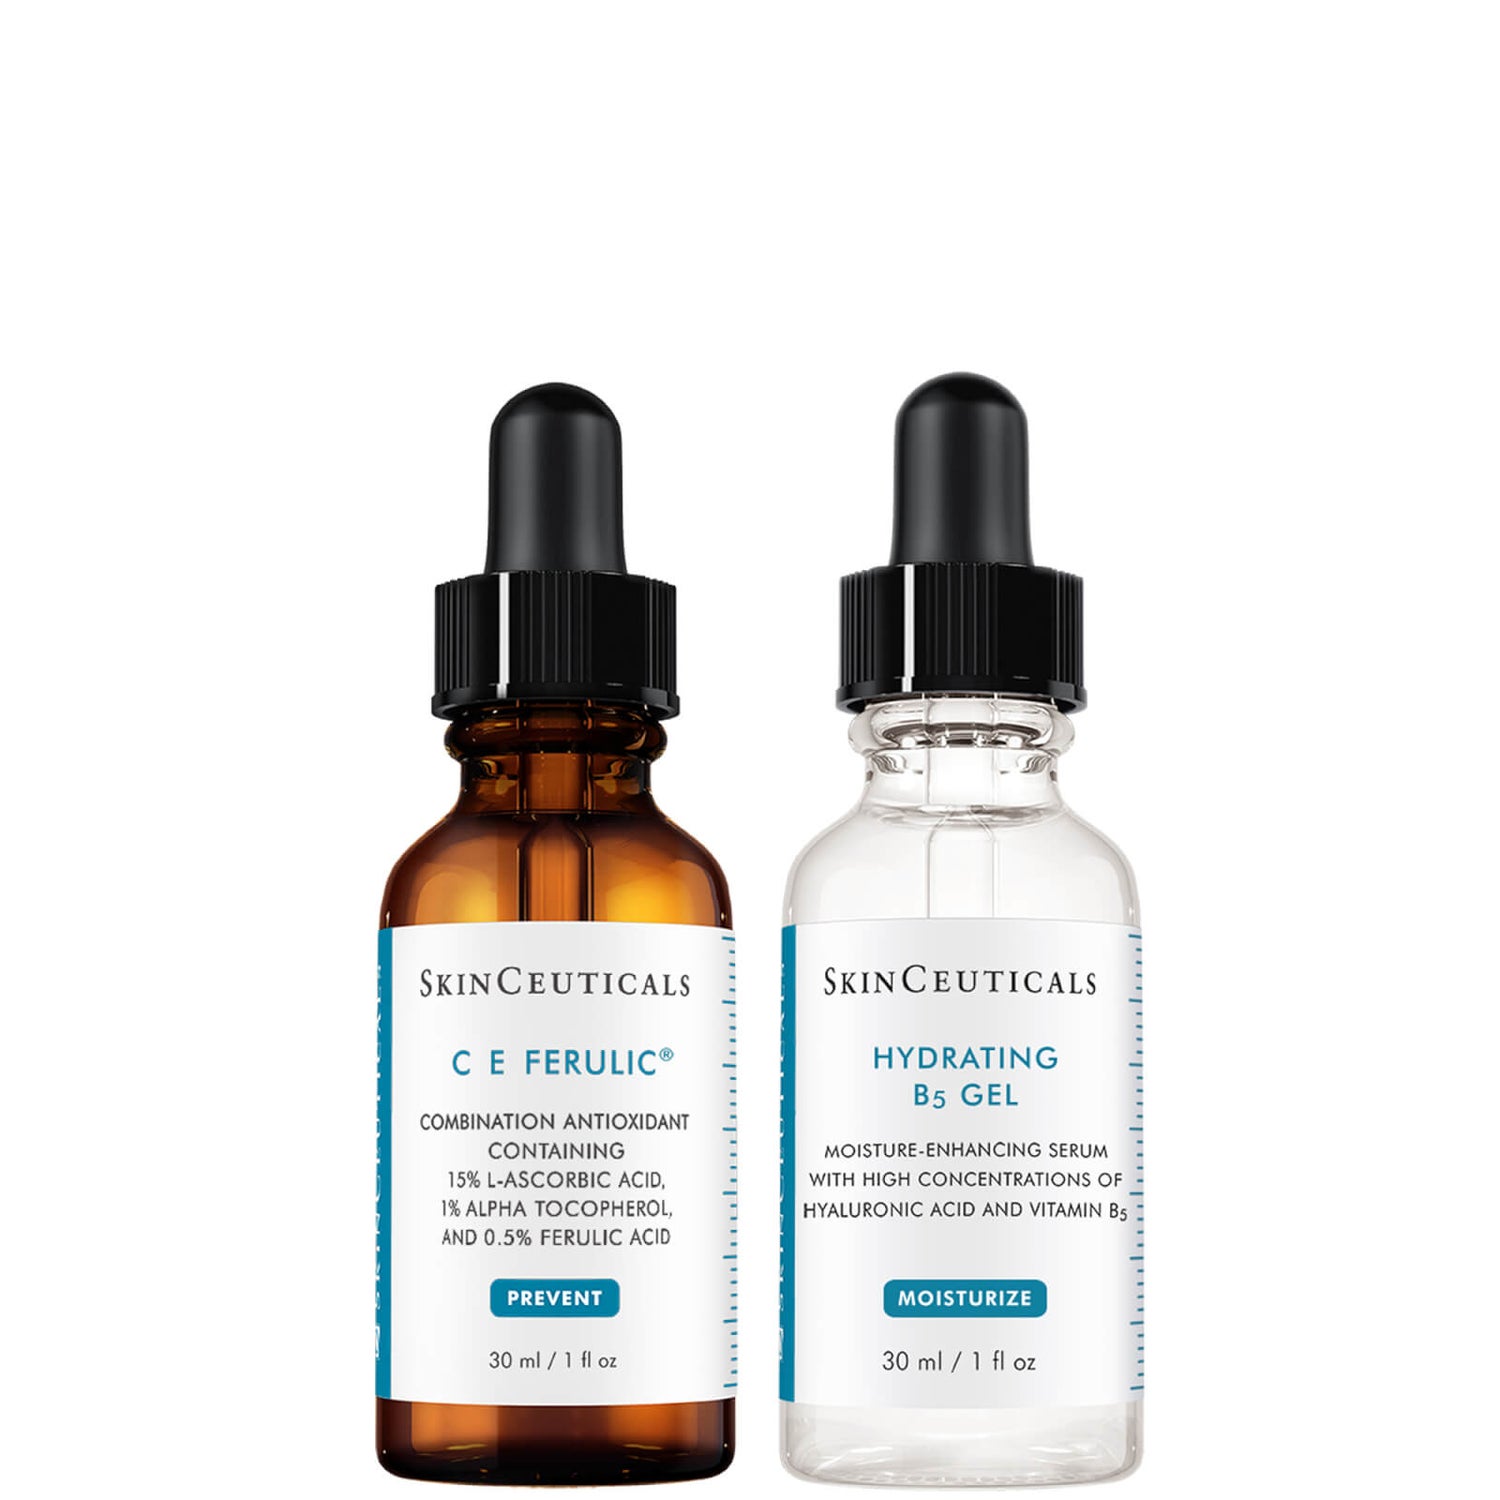 SkinCeuticals Hydrating Vitamin C & Hyaluronic Acid Serum Kit (Worth $255.00)